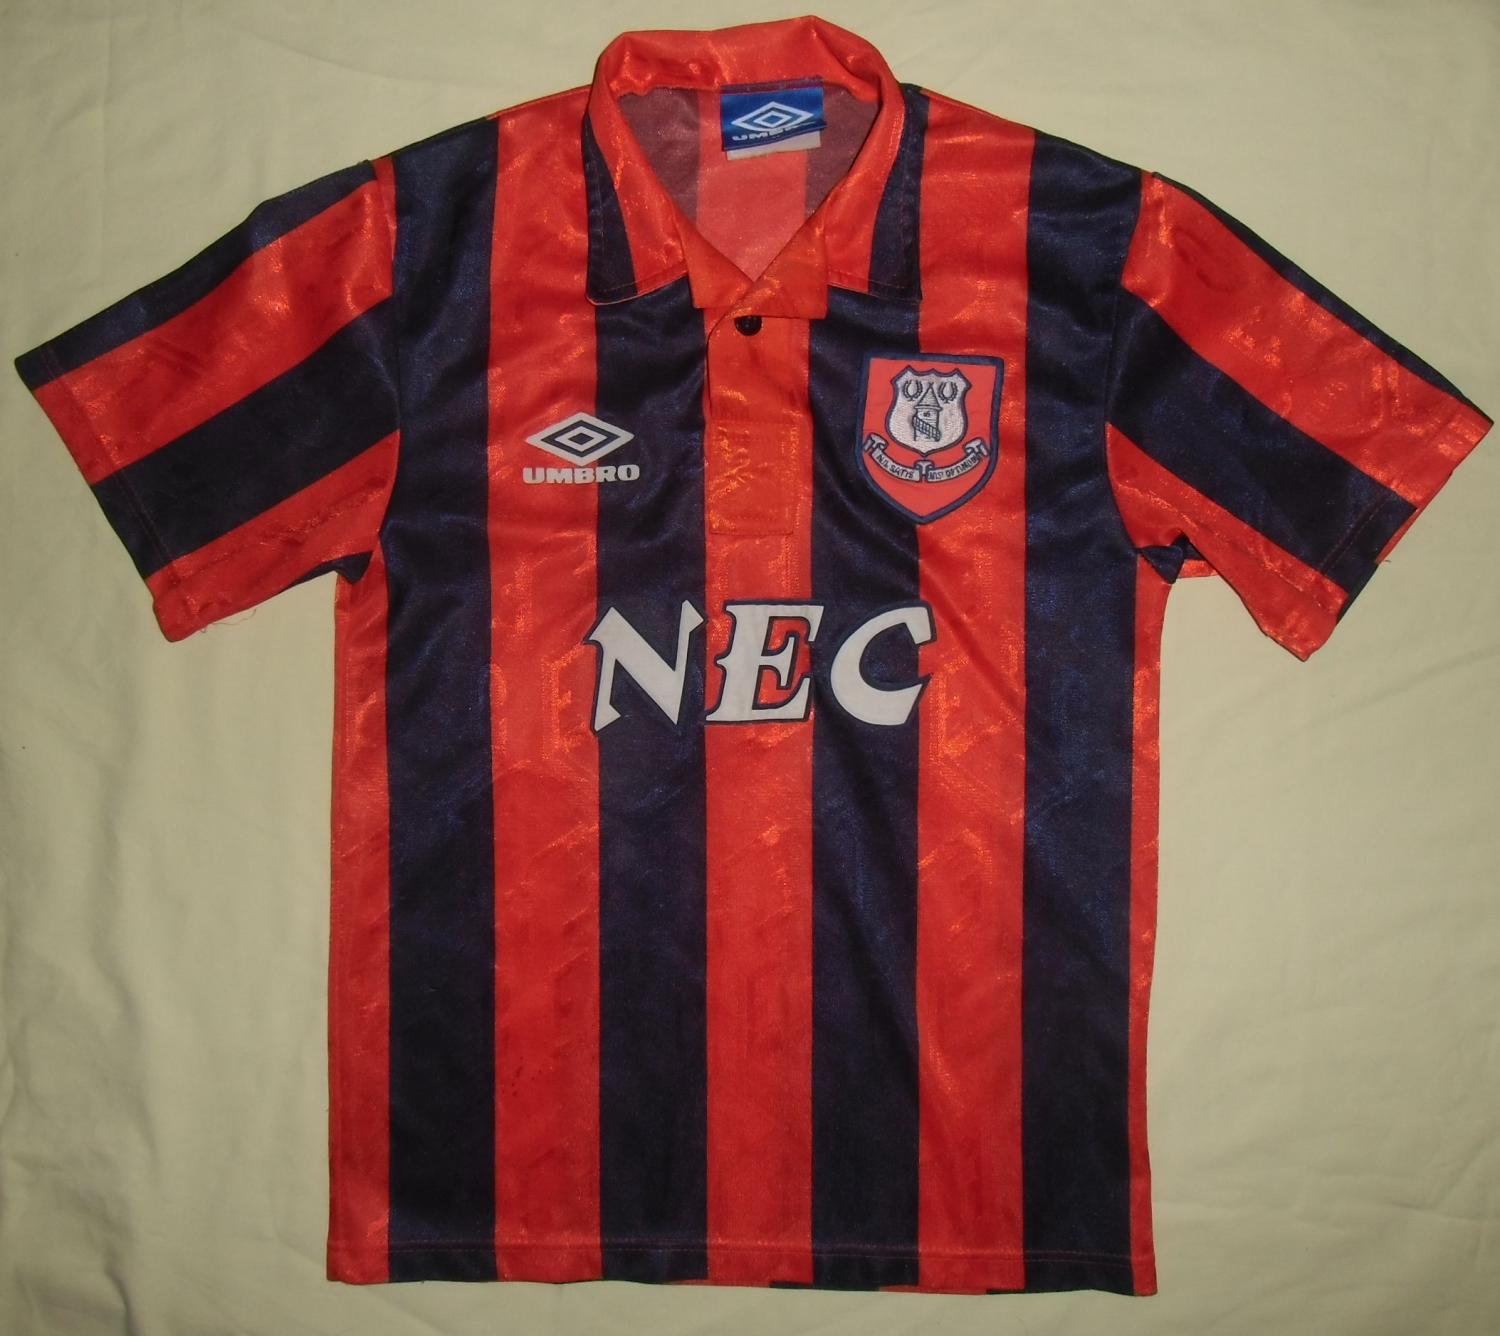 Everton Away football shirt 1992 - 1994. Added on 2013-02-03, 23:55